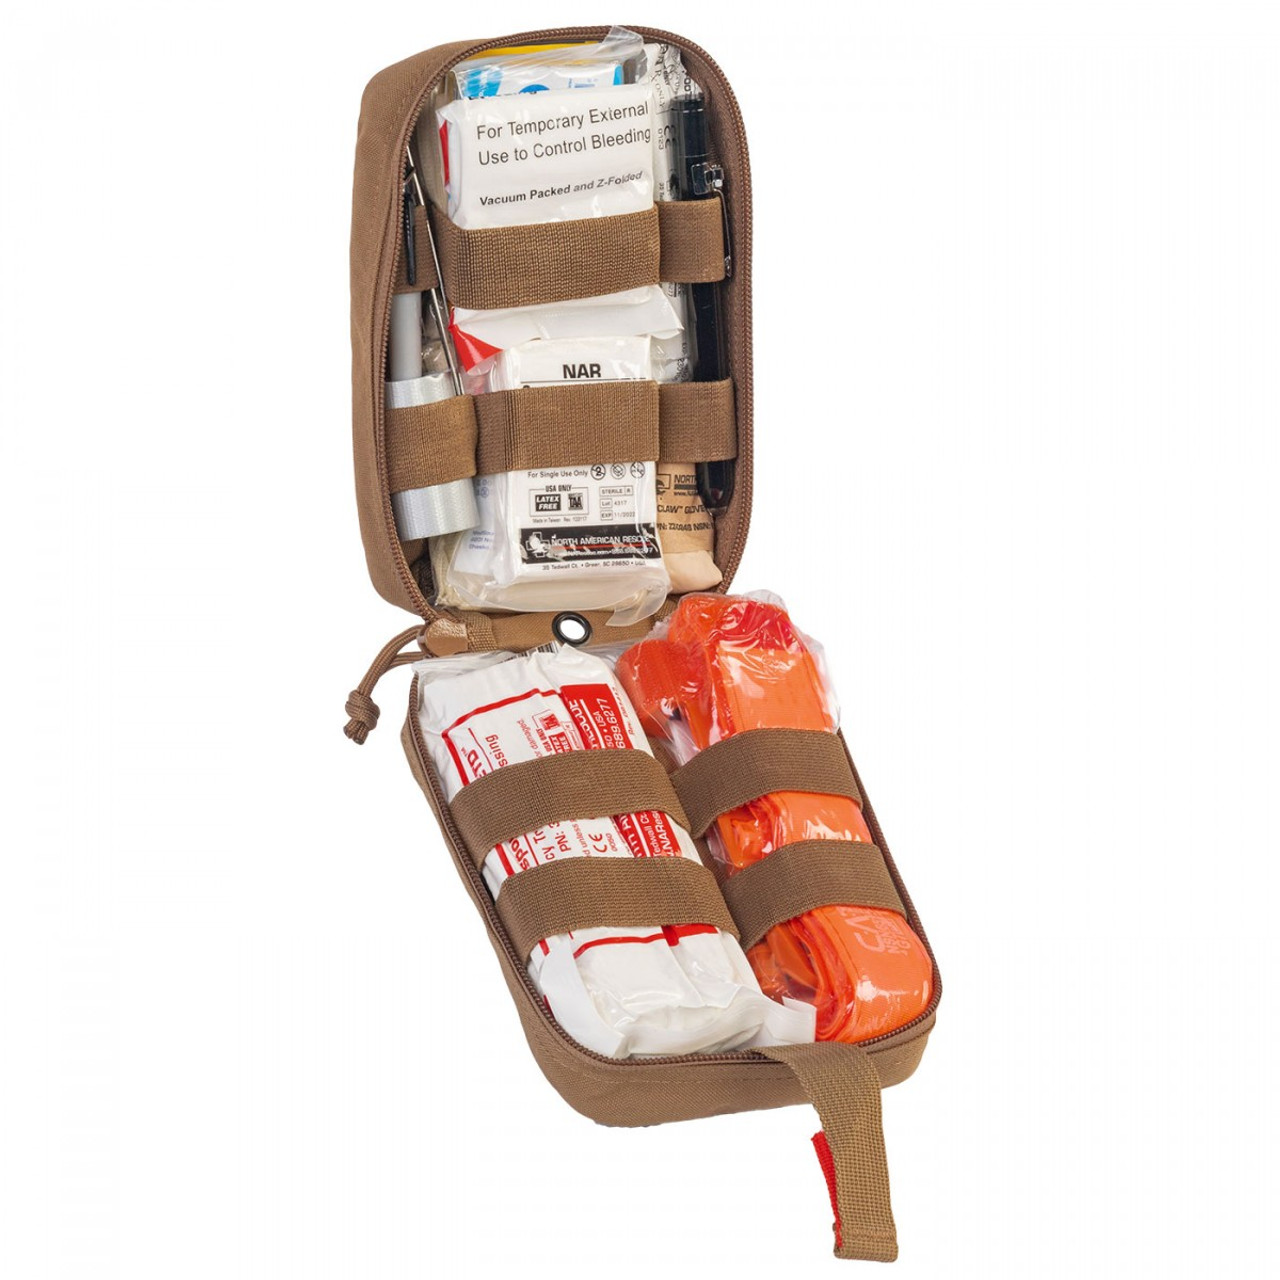 Backpack Insert Panel kit - with pistol holder, first aid kit